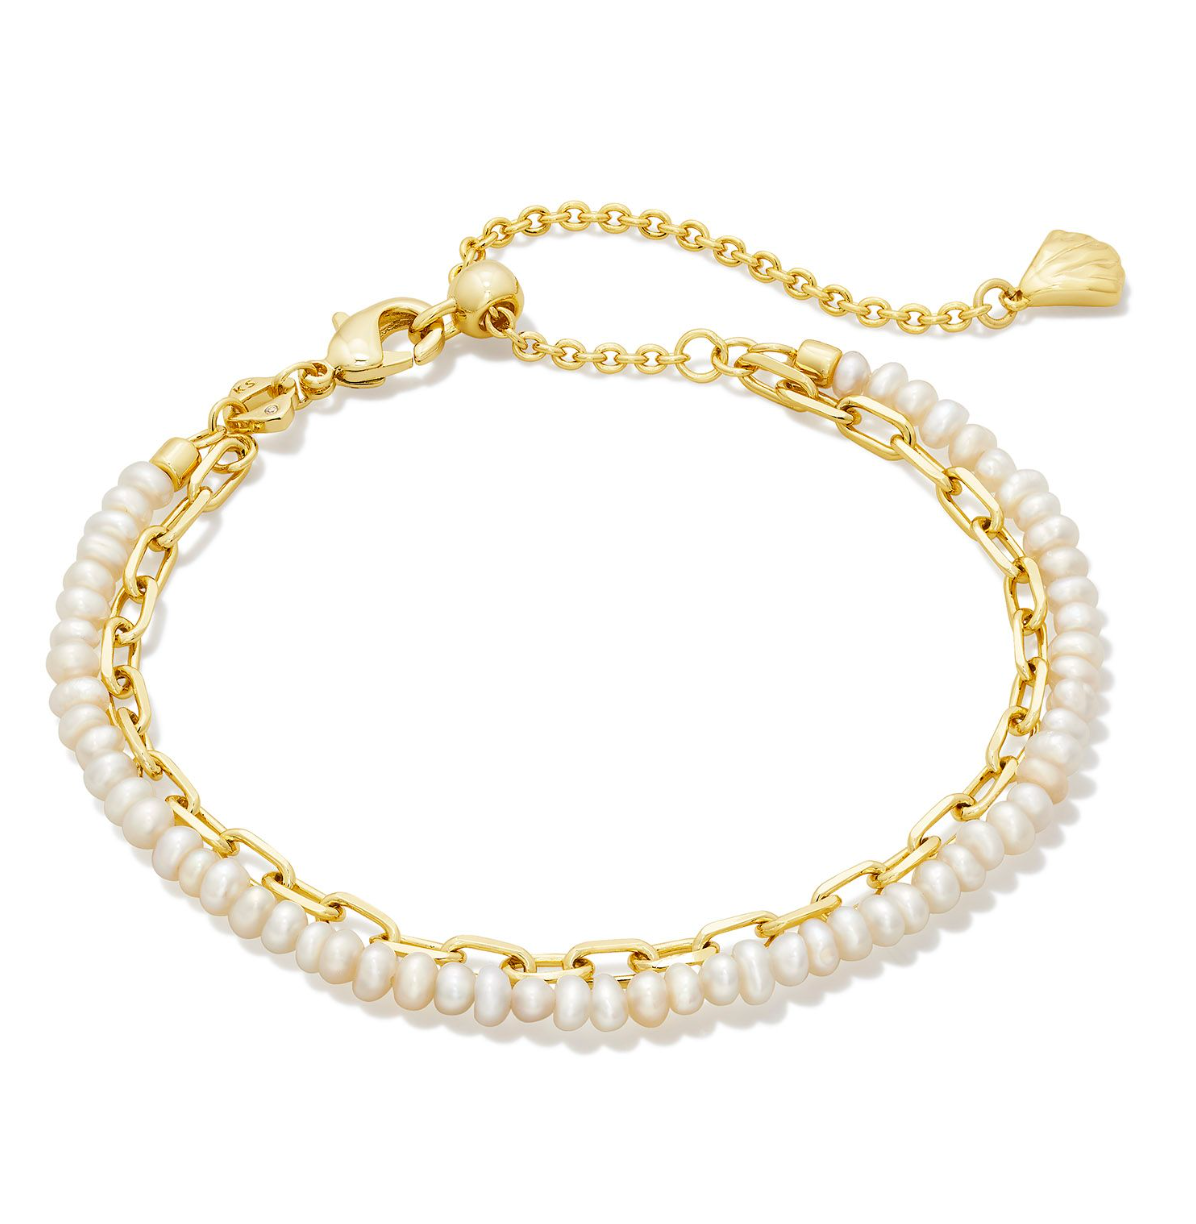 Lolo Gold Multi Strand Bracelet in White Pearl | KENDRA SCOTT - The Street Boutique 